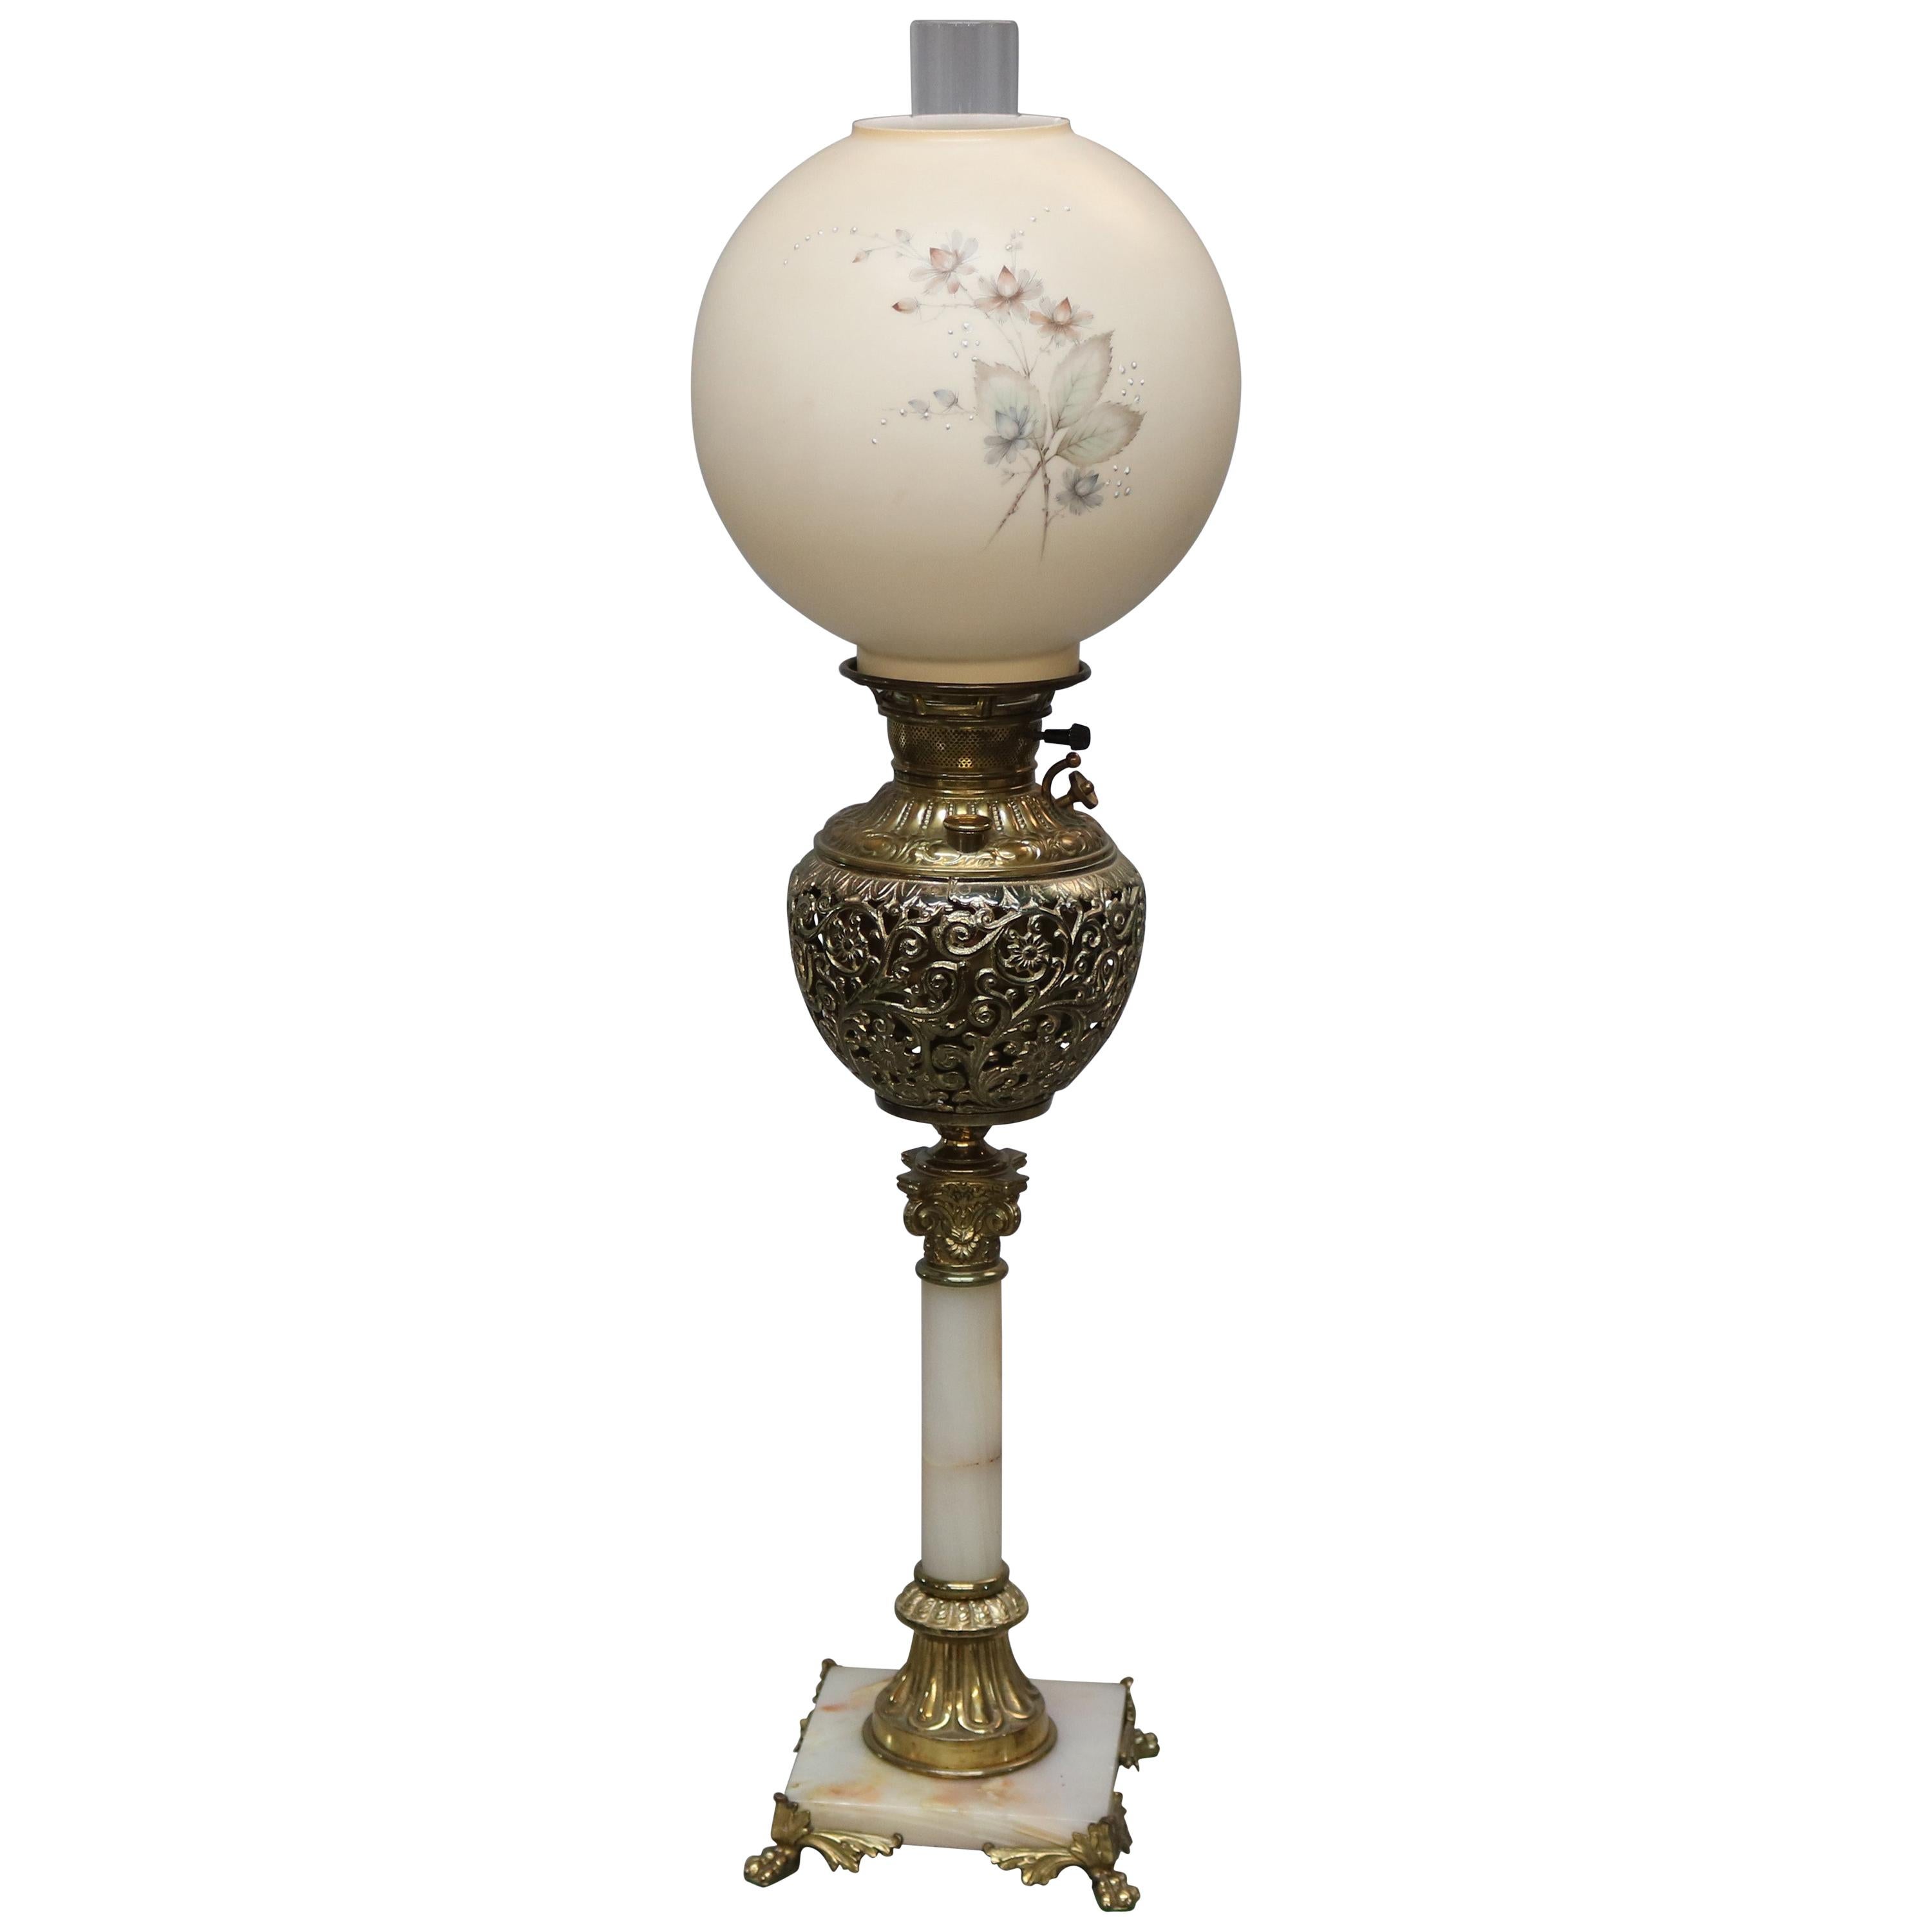 Antique Victorian Gilt Metal and Onyx Parlor Lamp, circa 1890